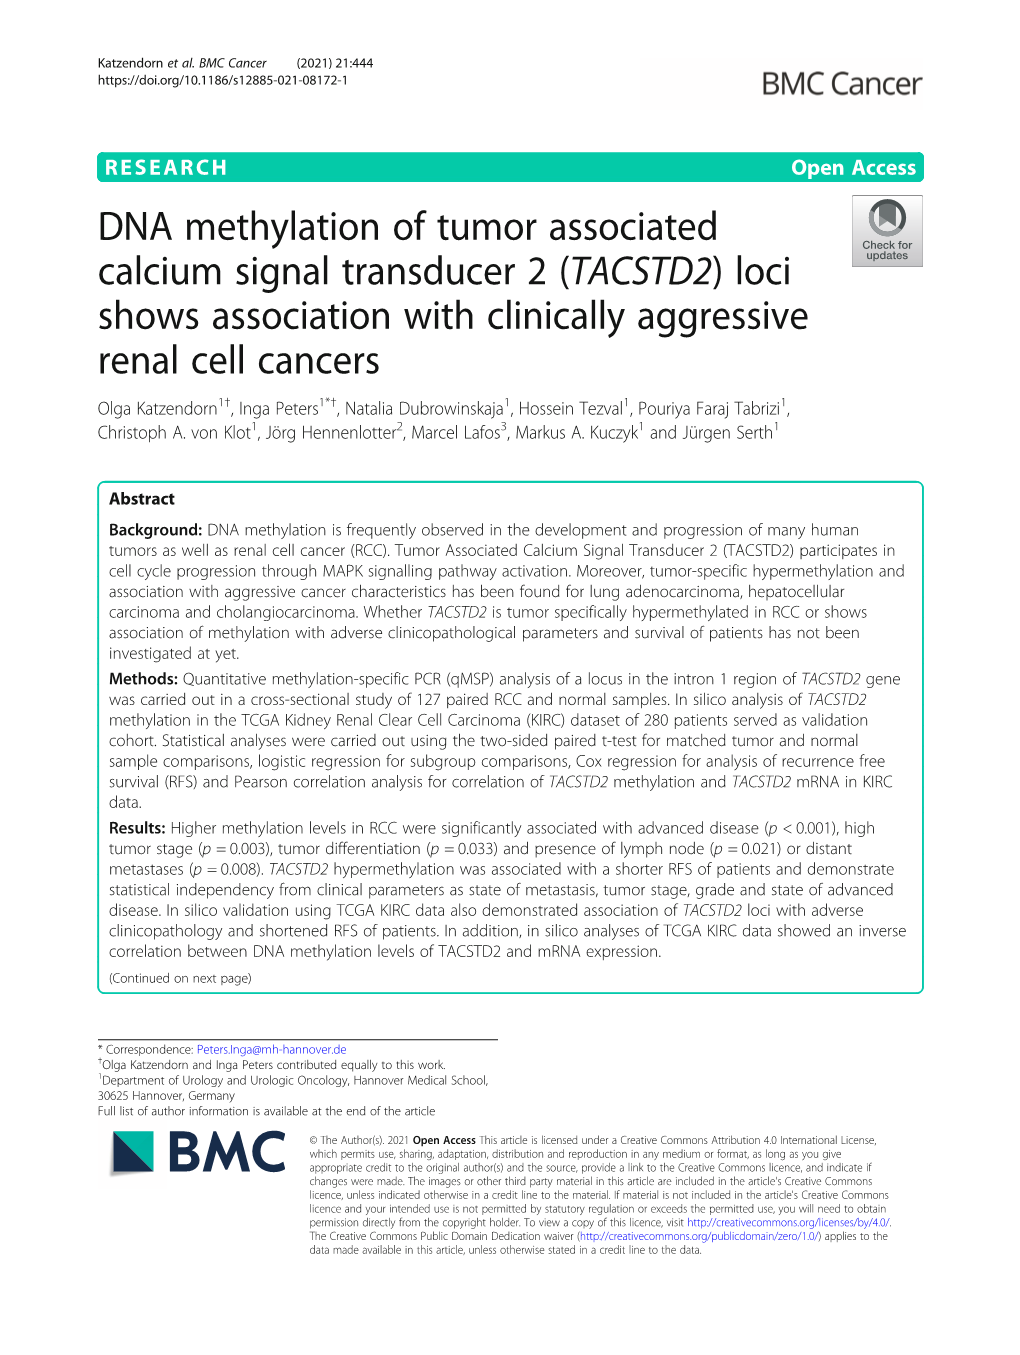 DNA Methylation of Tumor Associated Calcium Signal